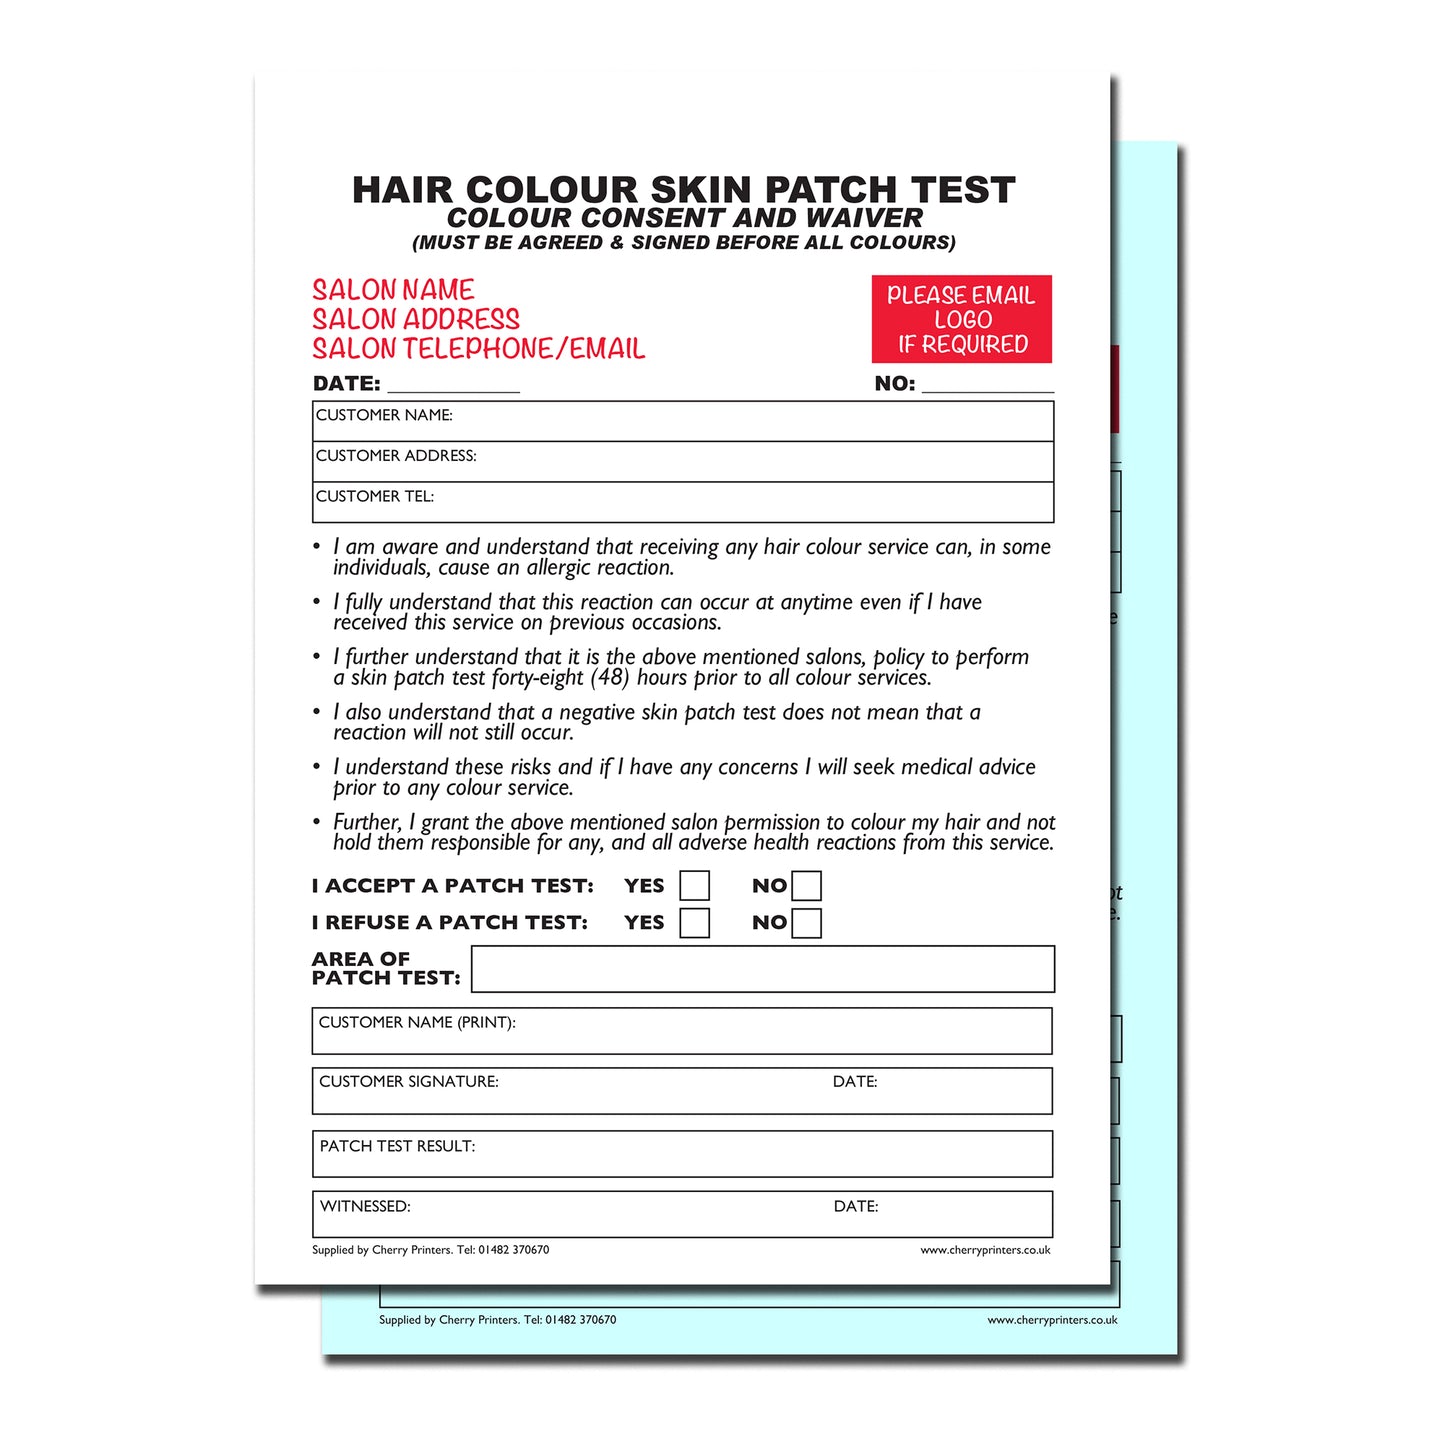 NCR *CUSTOM* Haarfarben Patch Test Duplikat Buch A5 Packungen